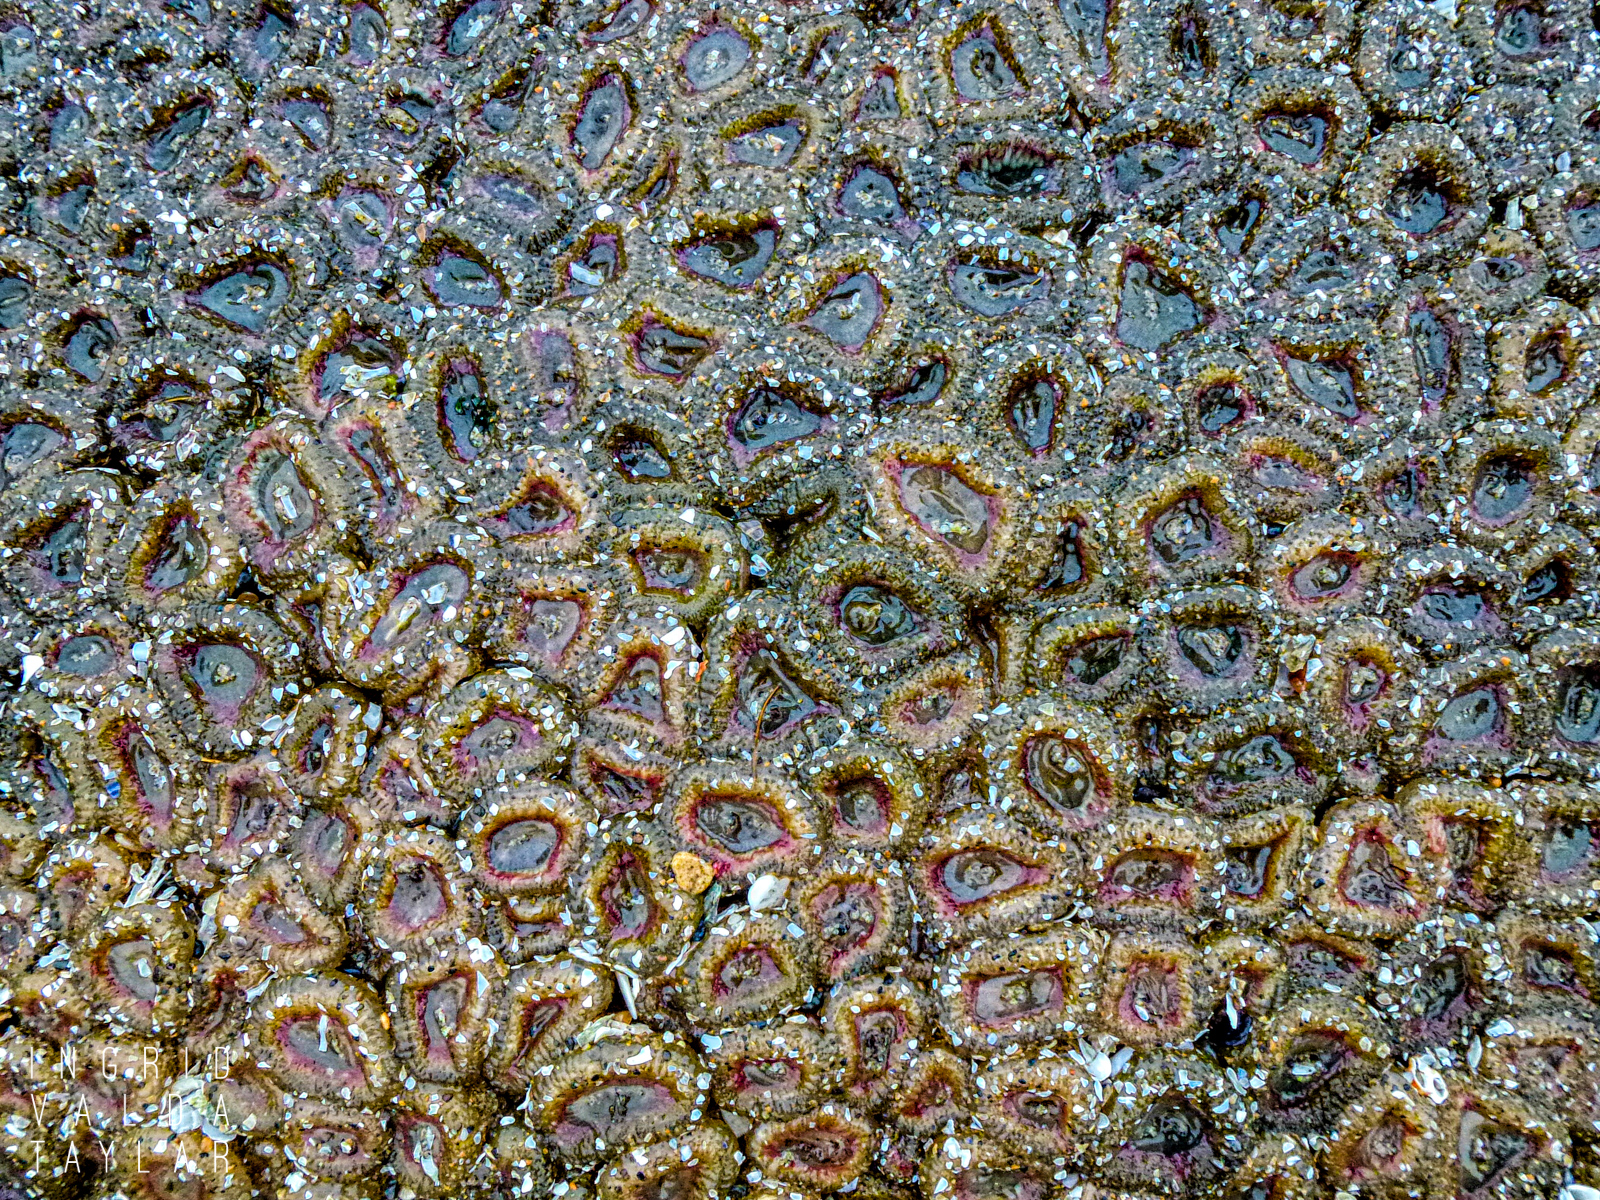 ANEM3 - Aggregating Anemones on Oregon Coast 2